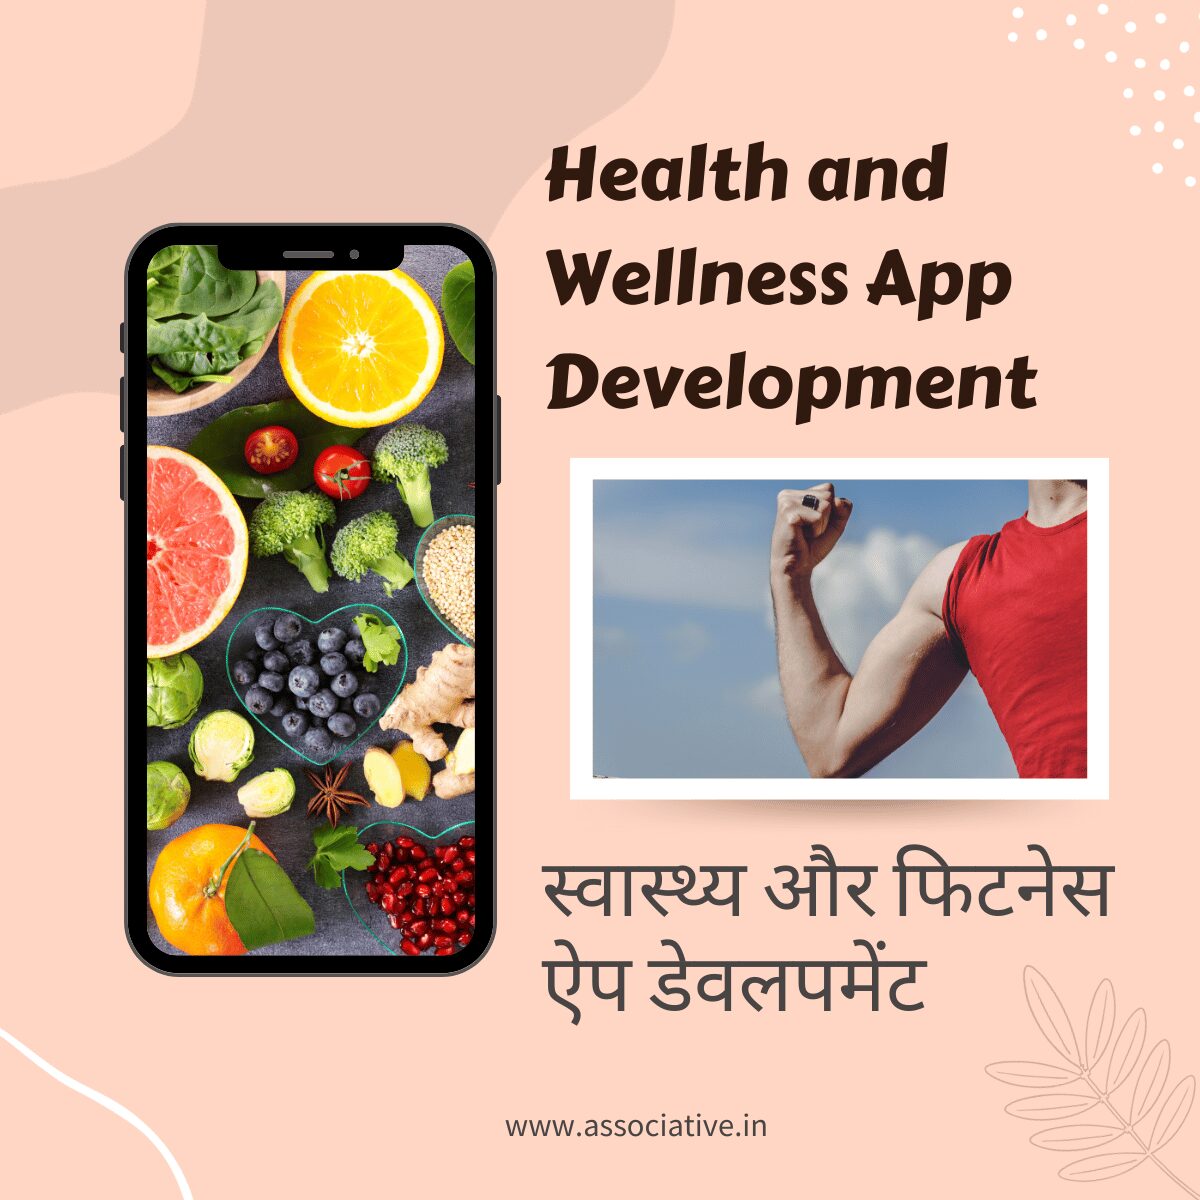 Health and Wellness App Development स्वास्थ्य और फिटनेस ऐप डेवलपमेंट